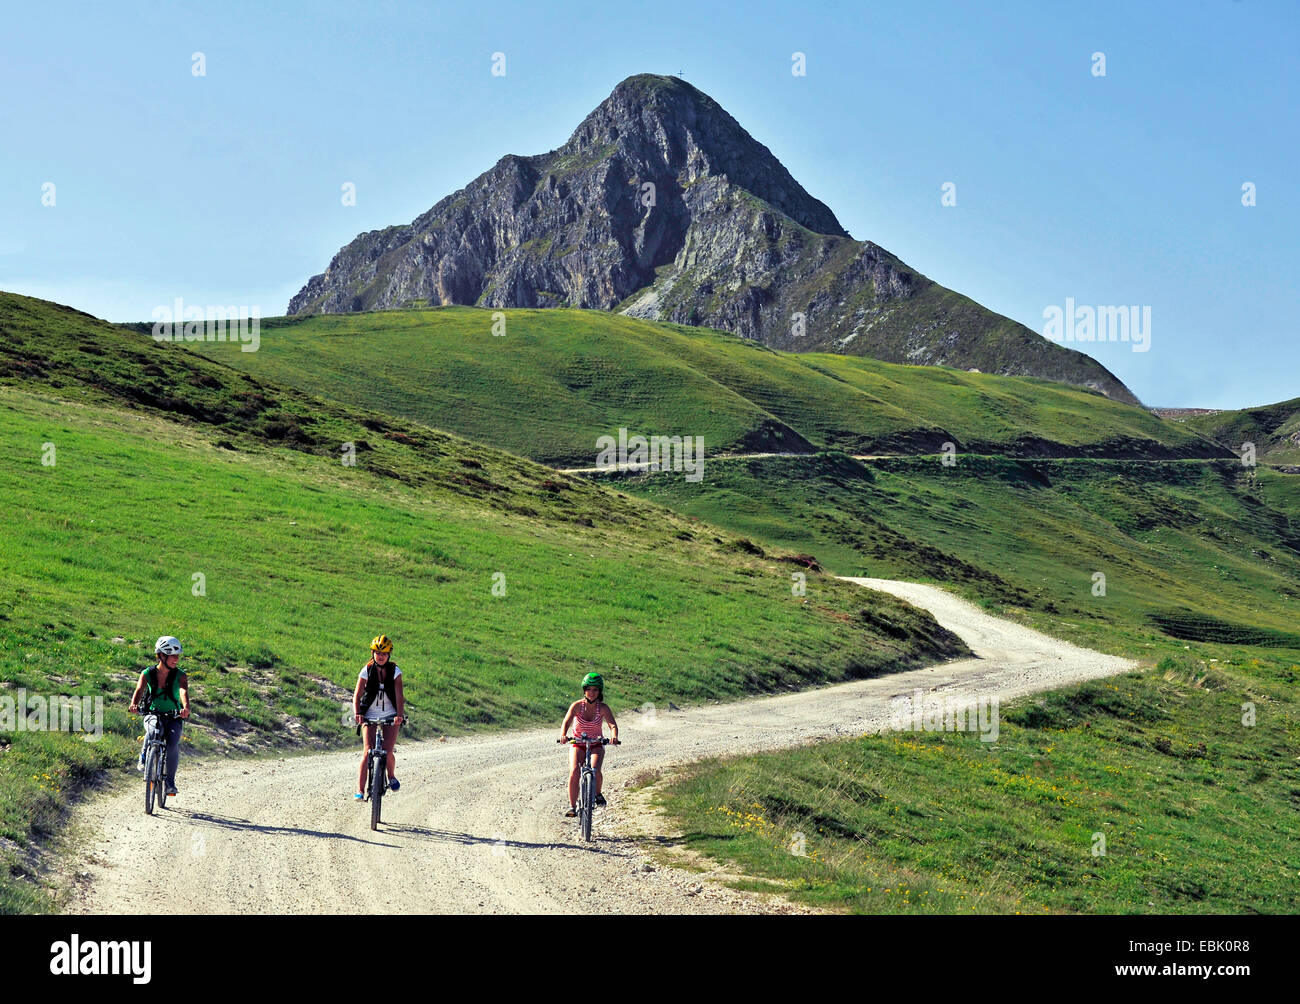 three teenagers mountain biking on a path in idyllic mountain scenery, France, Savoie, La Plagne Stock Photo